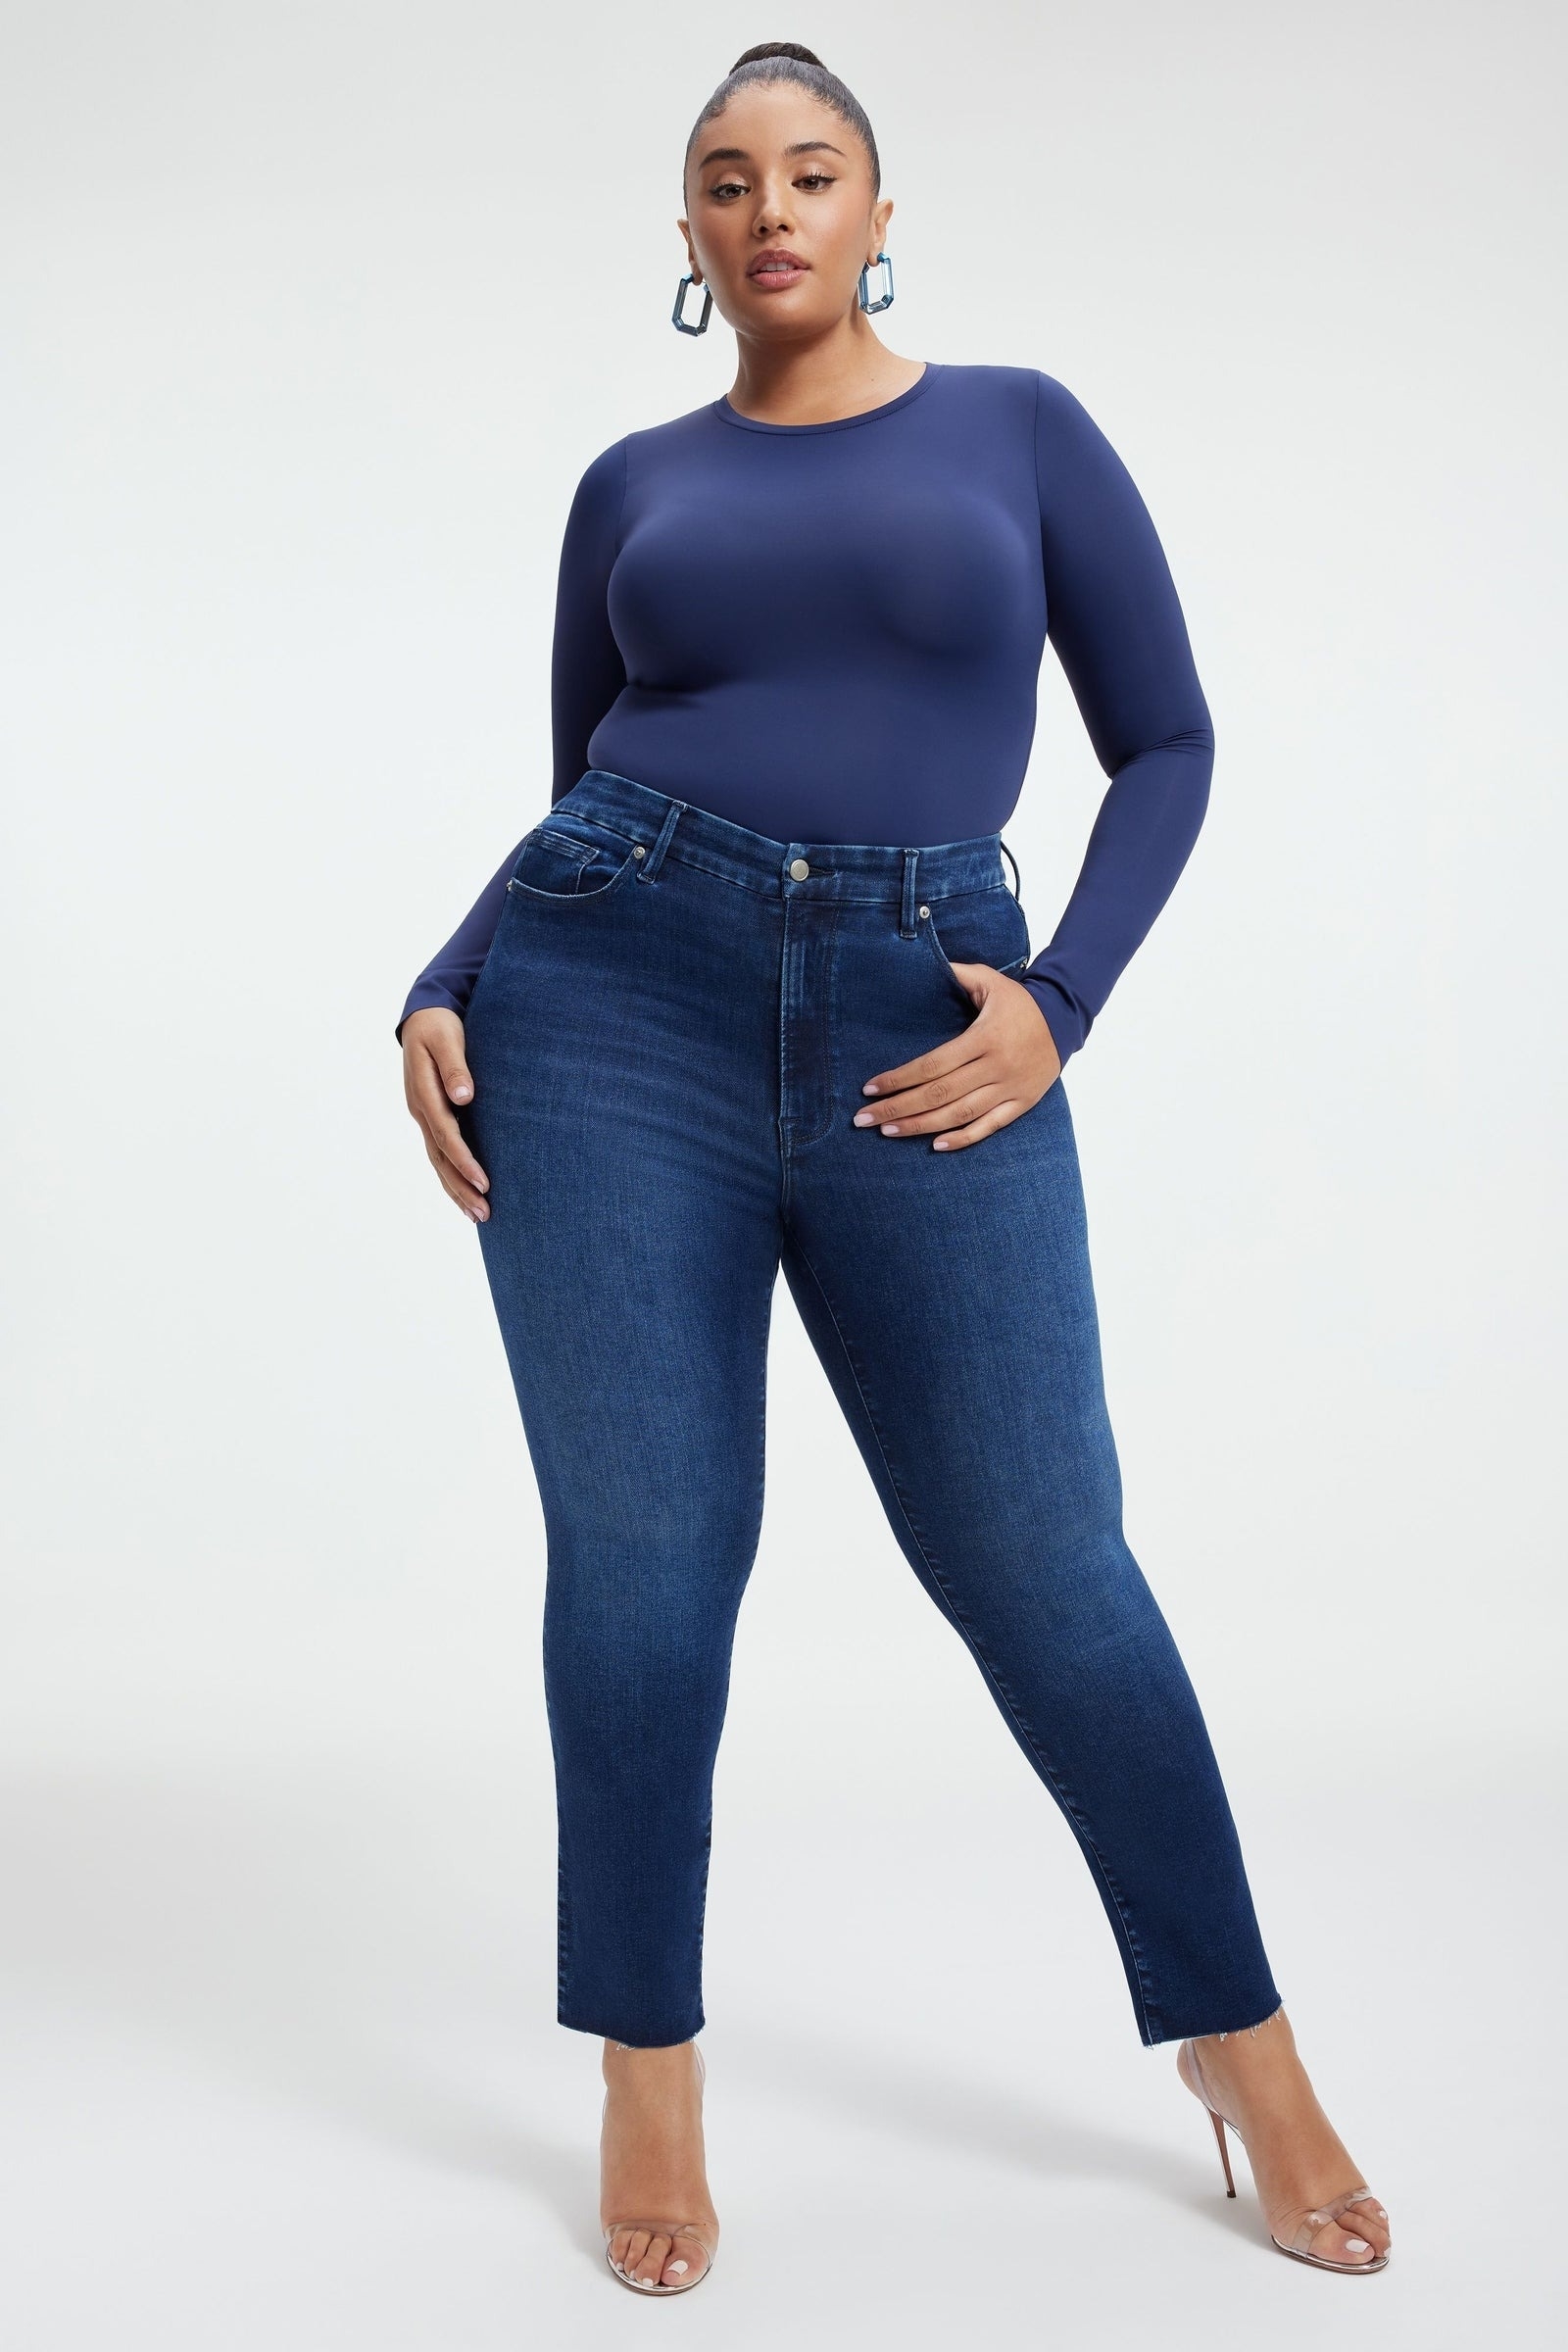 a model wearing the deep blue jeans